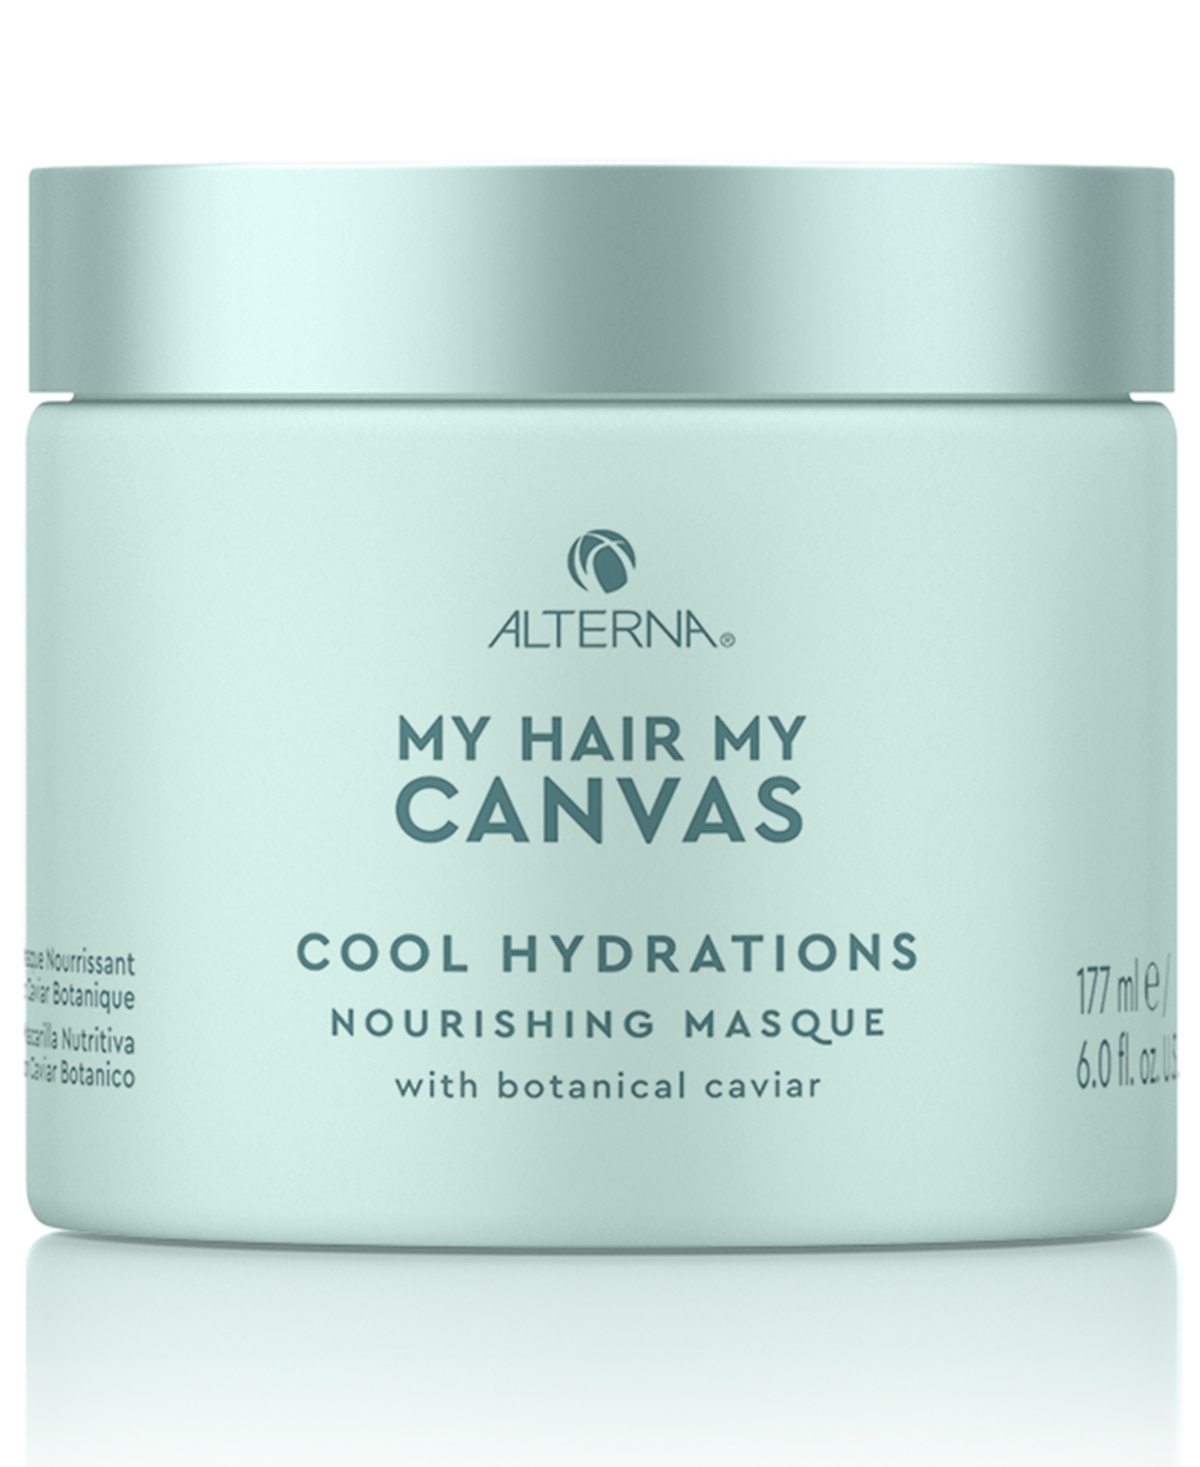 Alterna My Hair My Canvas Cool Hydrations Nourishing Masque, 6-oz.